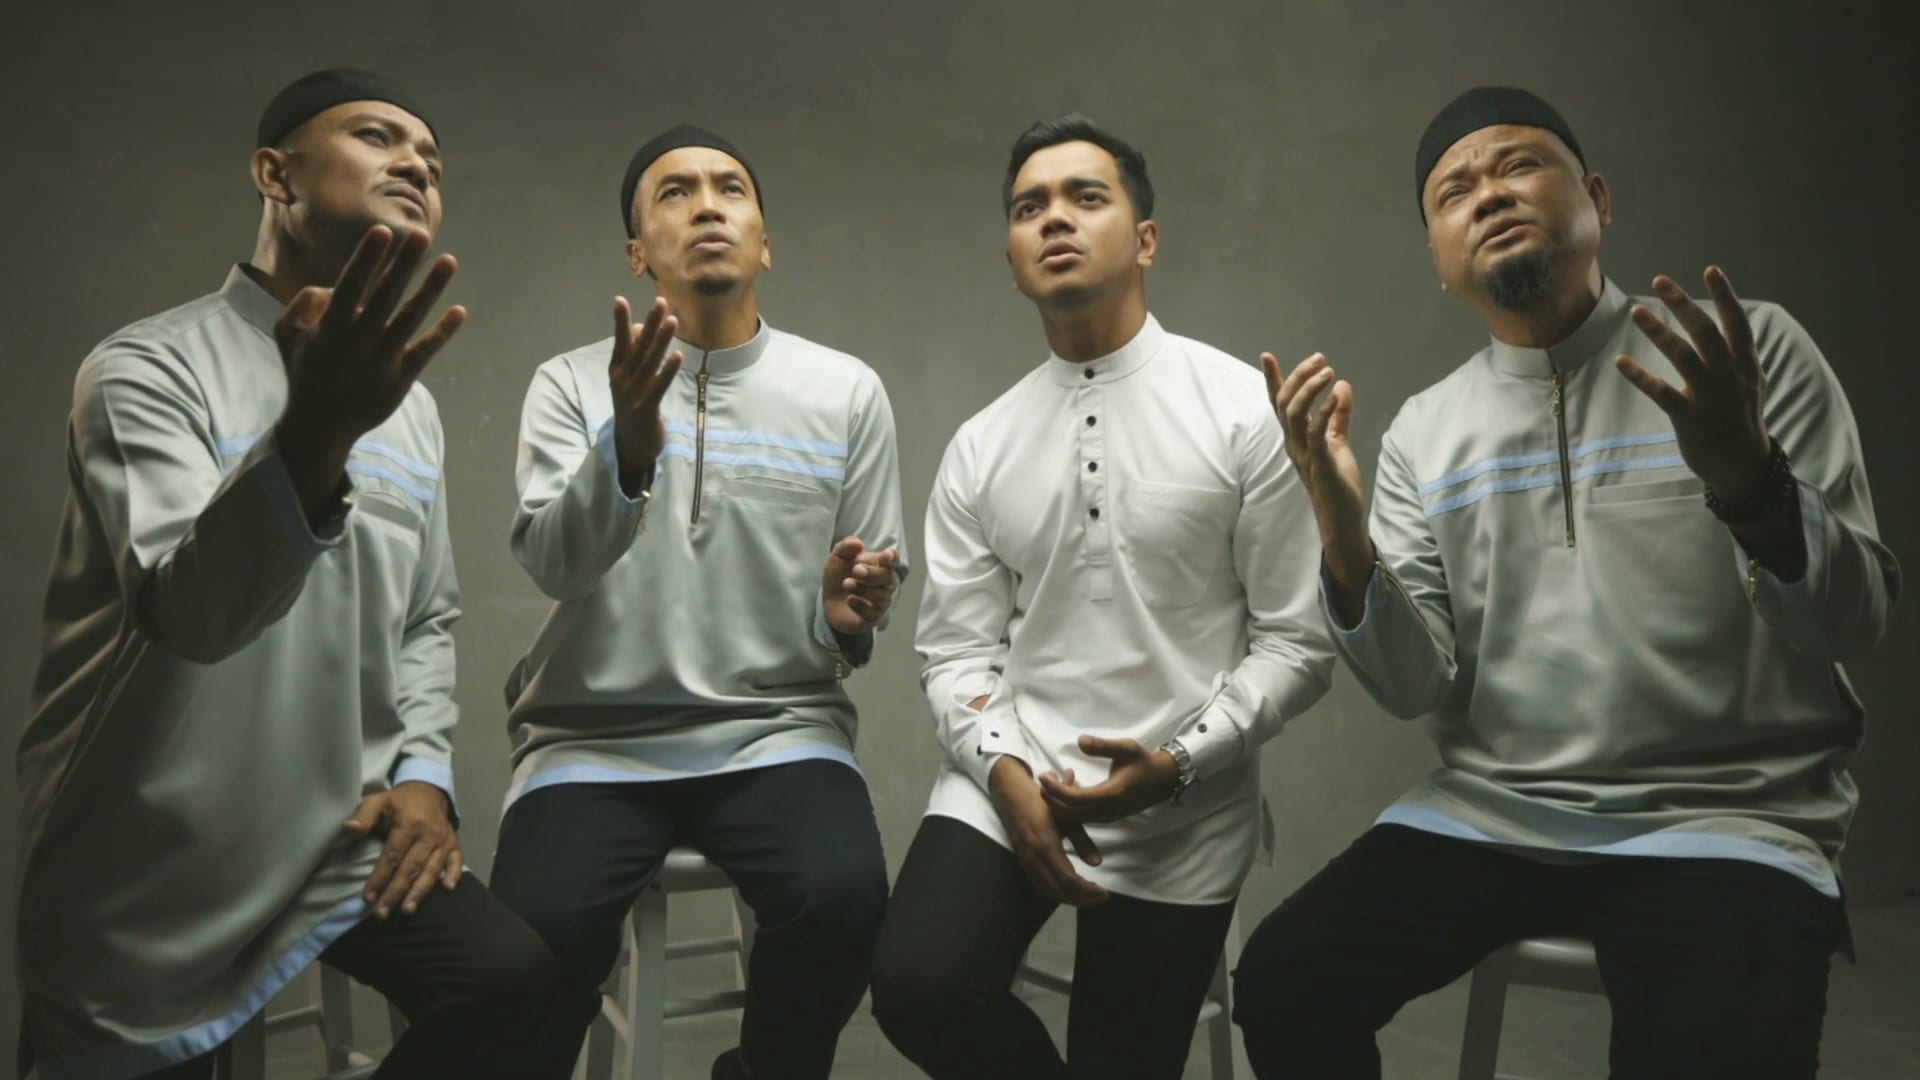 [VIDEO] “Sebak Dengar..” – Harmoni Alif Satar & Raihan Detik Rasa Keinsafan